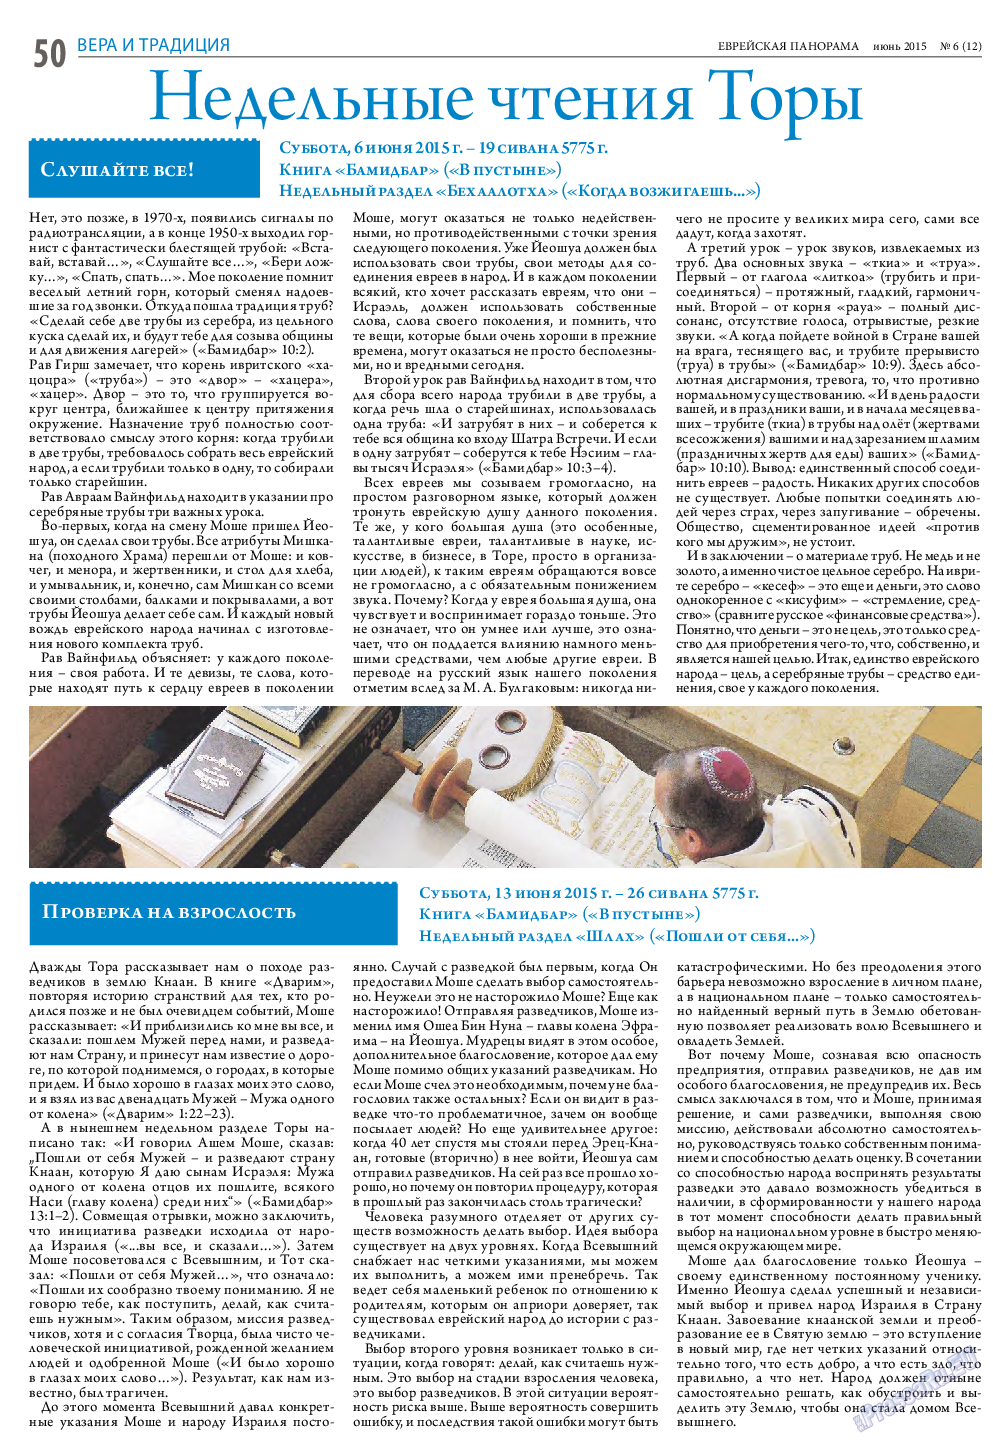 Еврейская панорама, газета. 2015 №6 стр.50